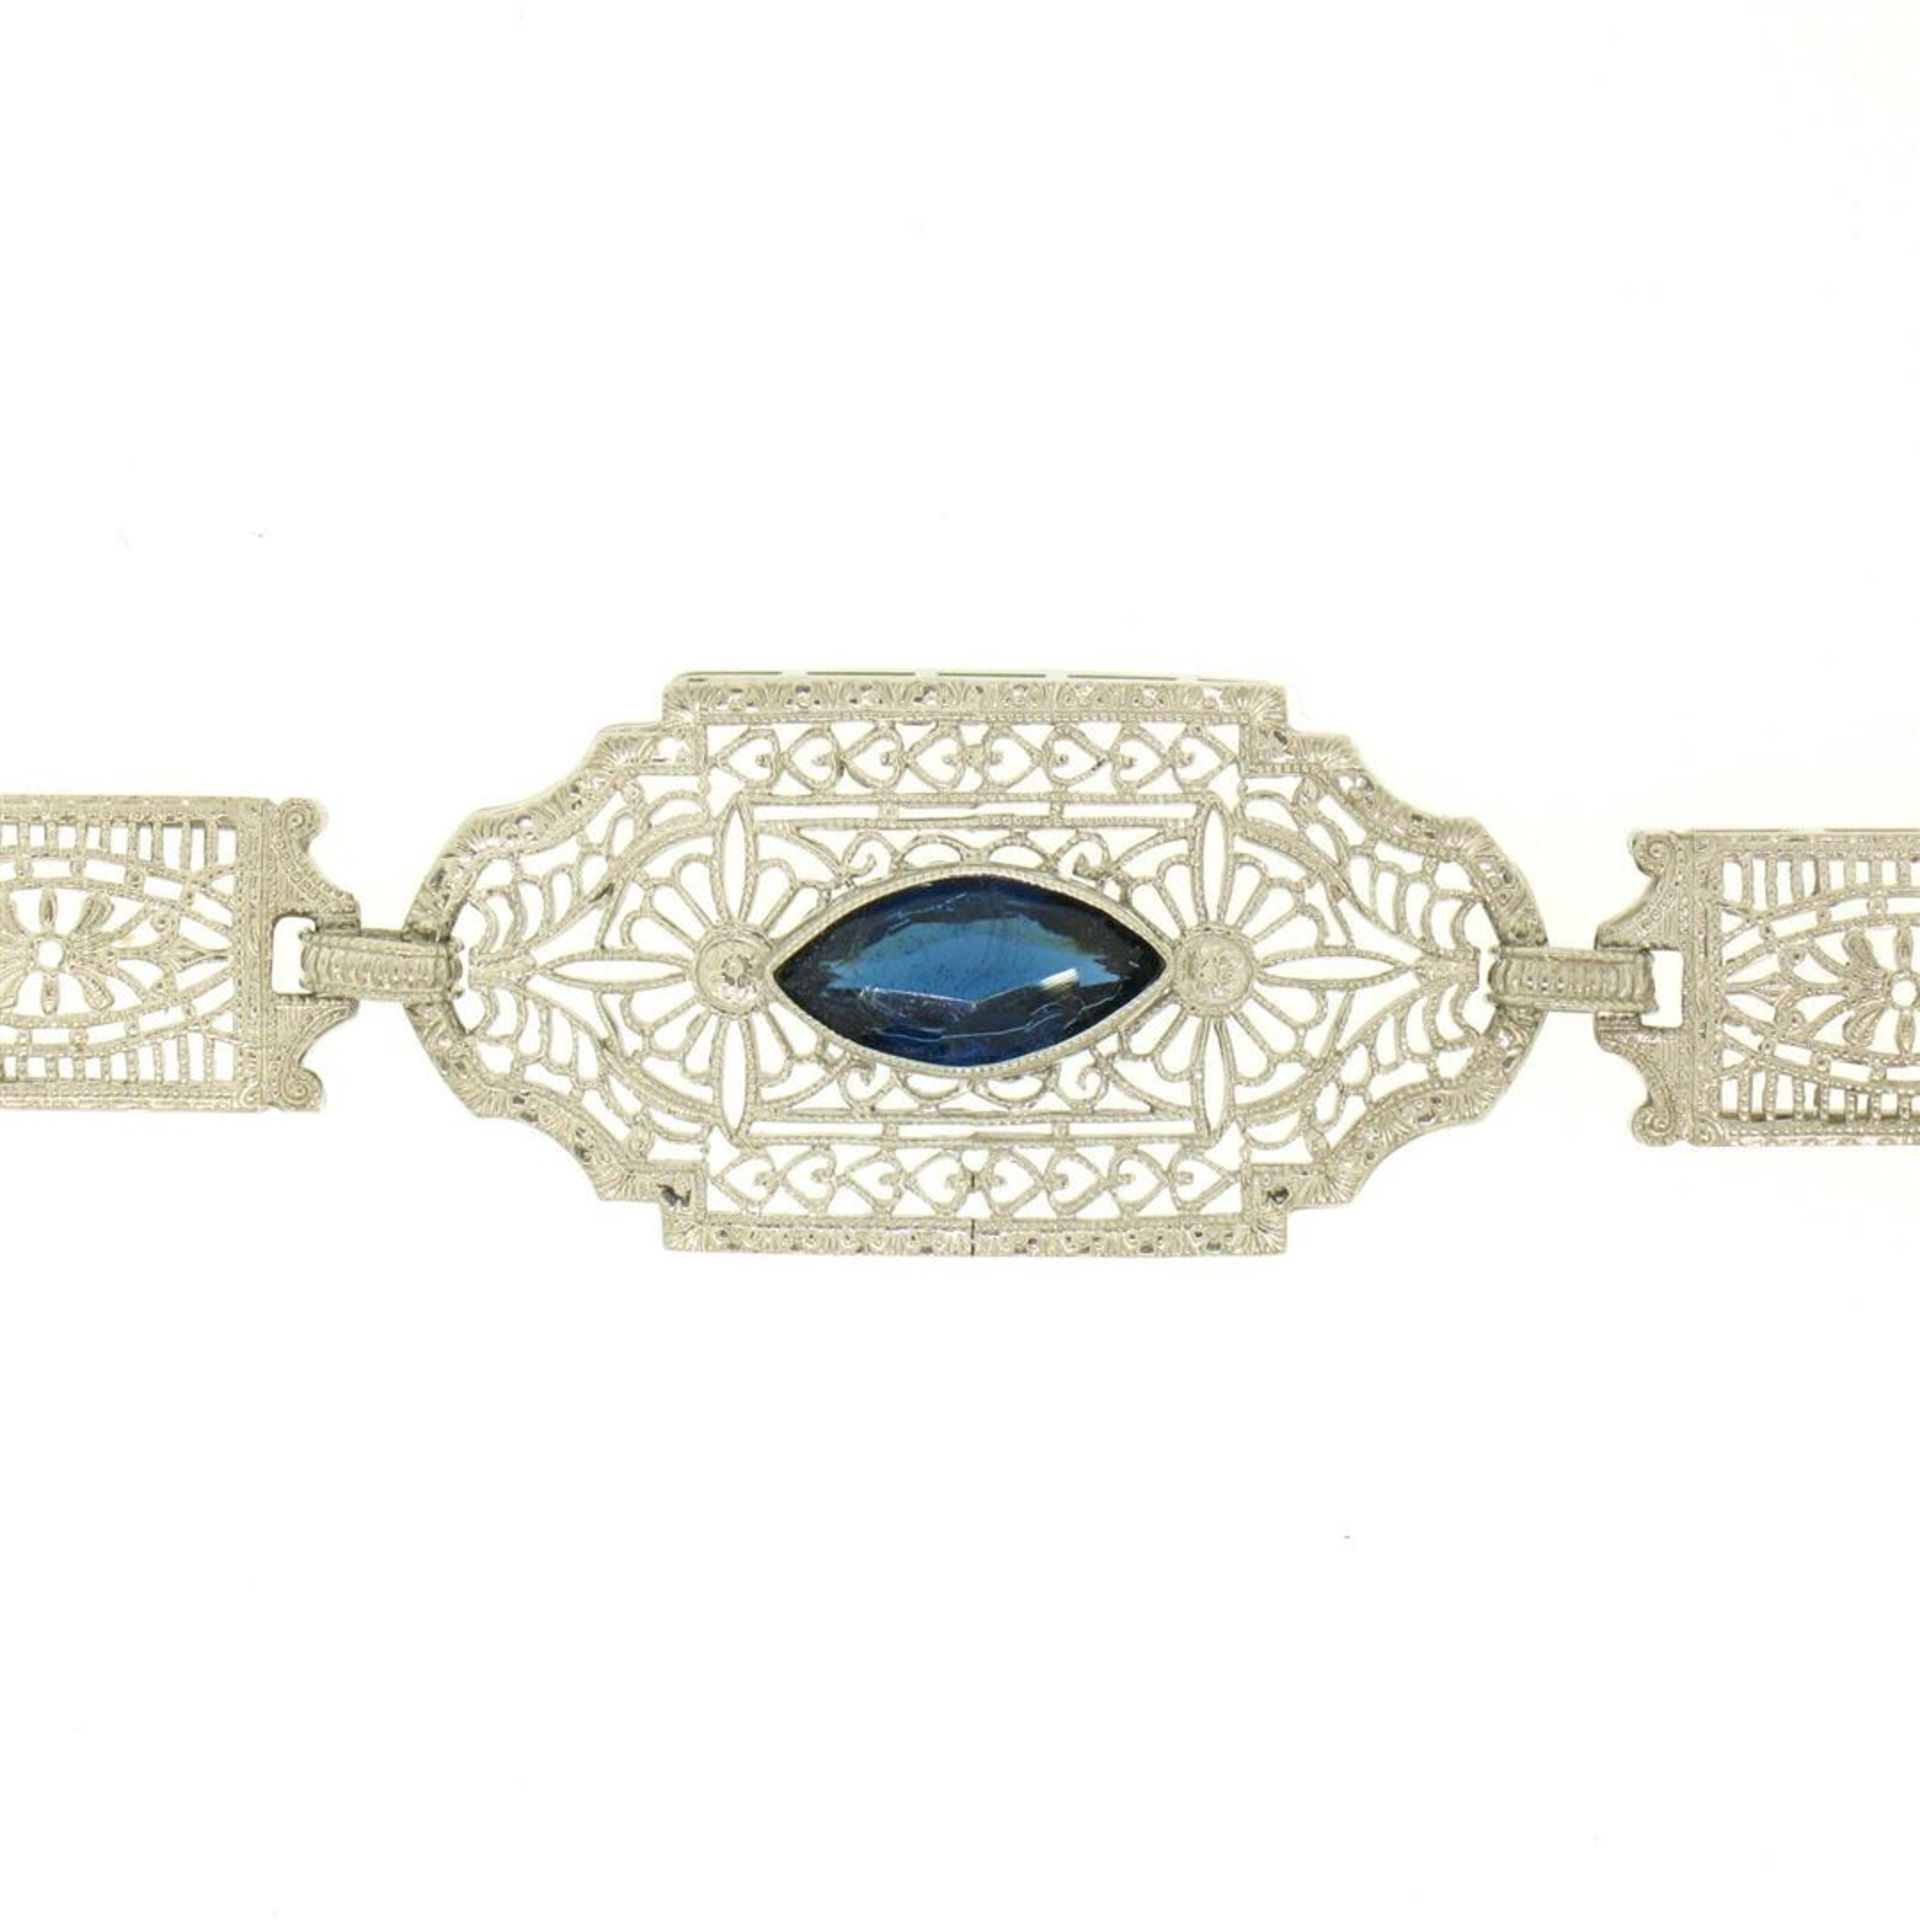 10k White Gold Filigree Link Bracelet w/ Marquise Sim Sapphire - Image 2 of 9